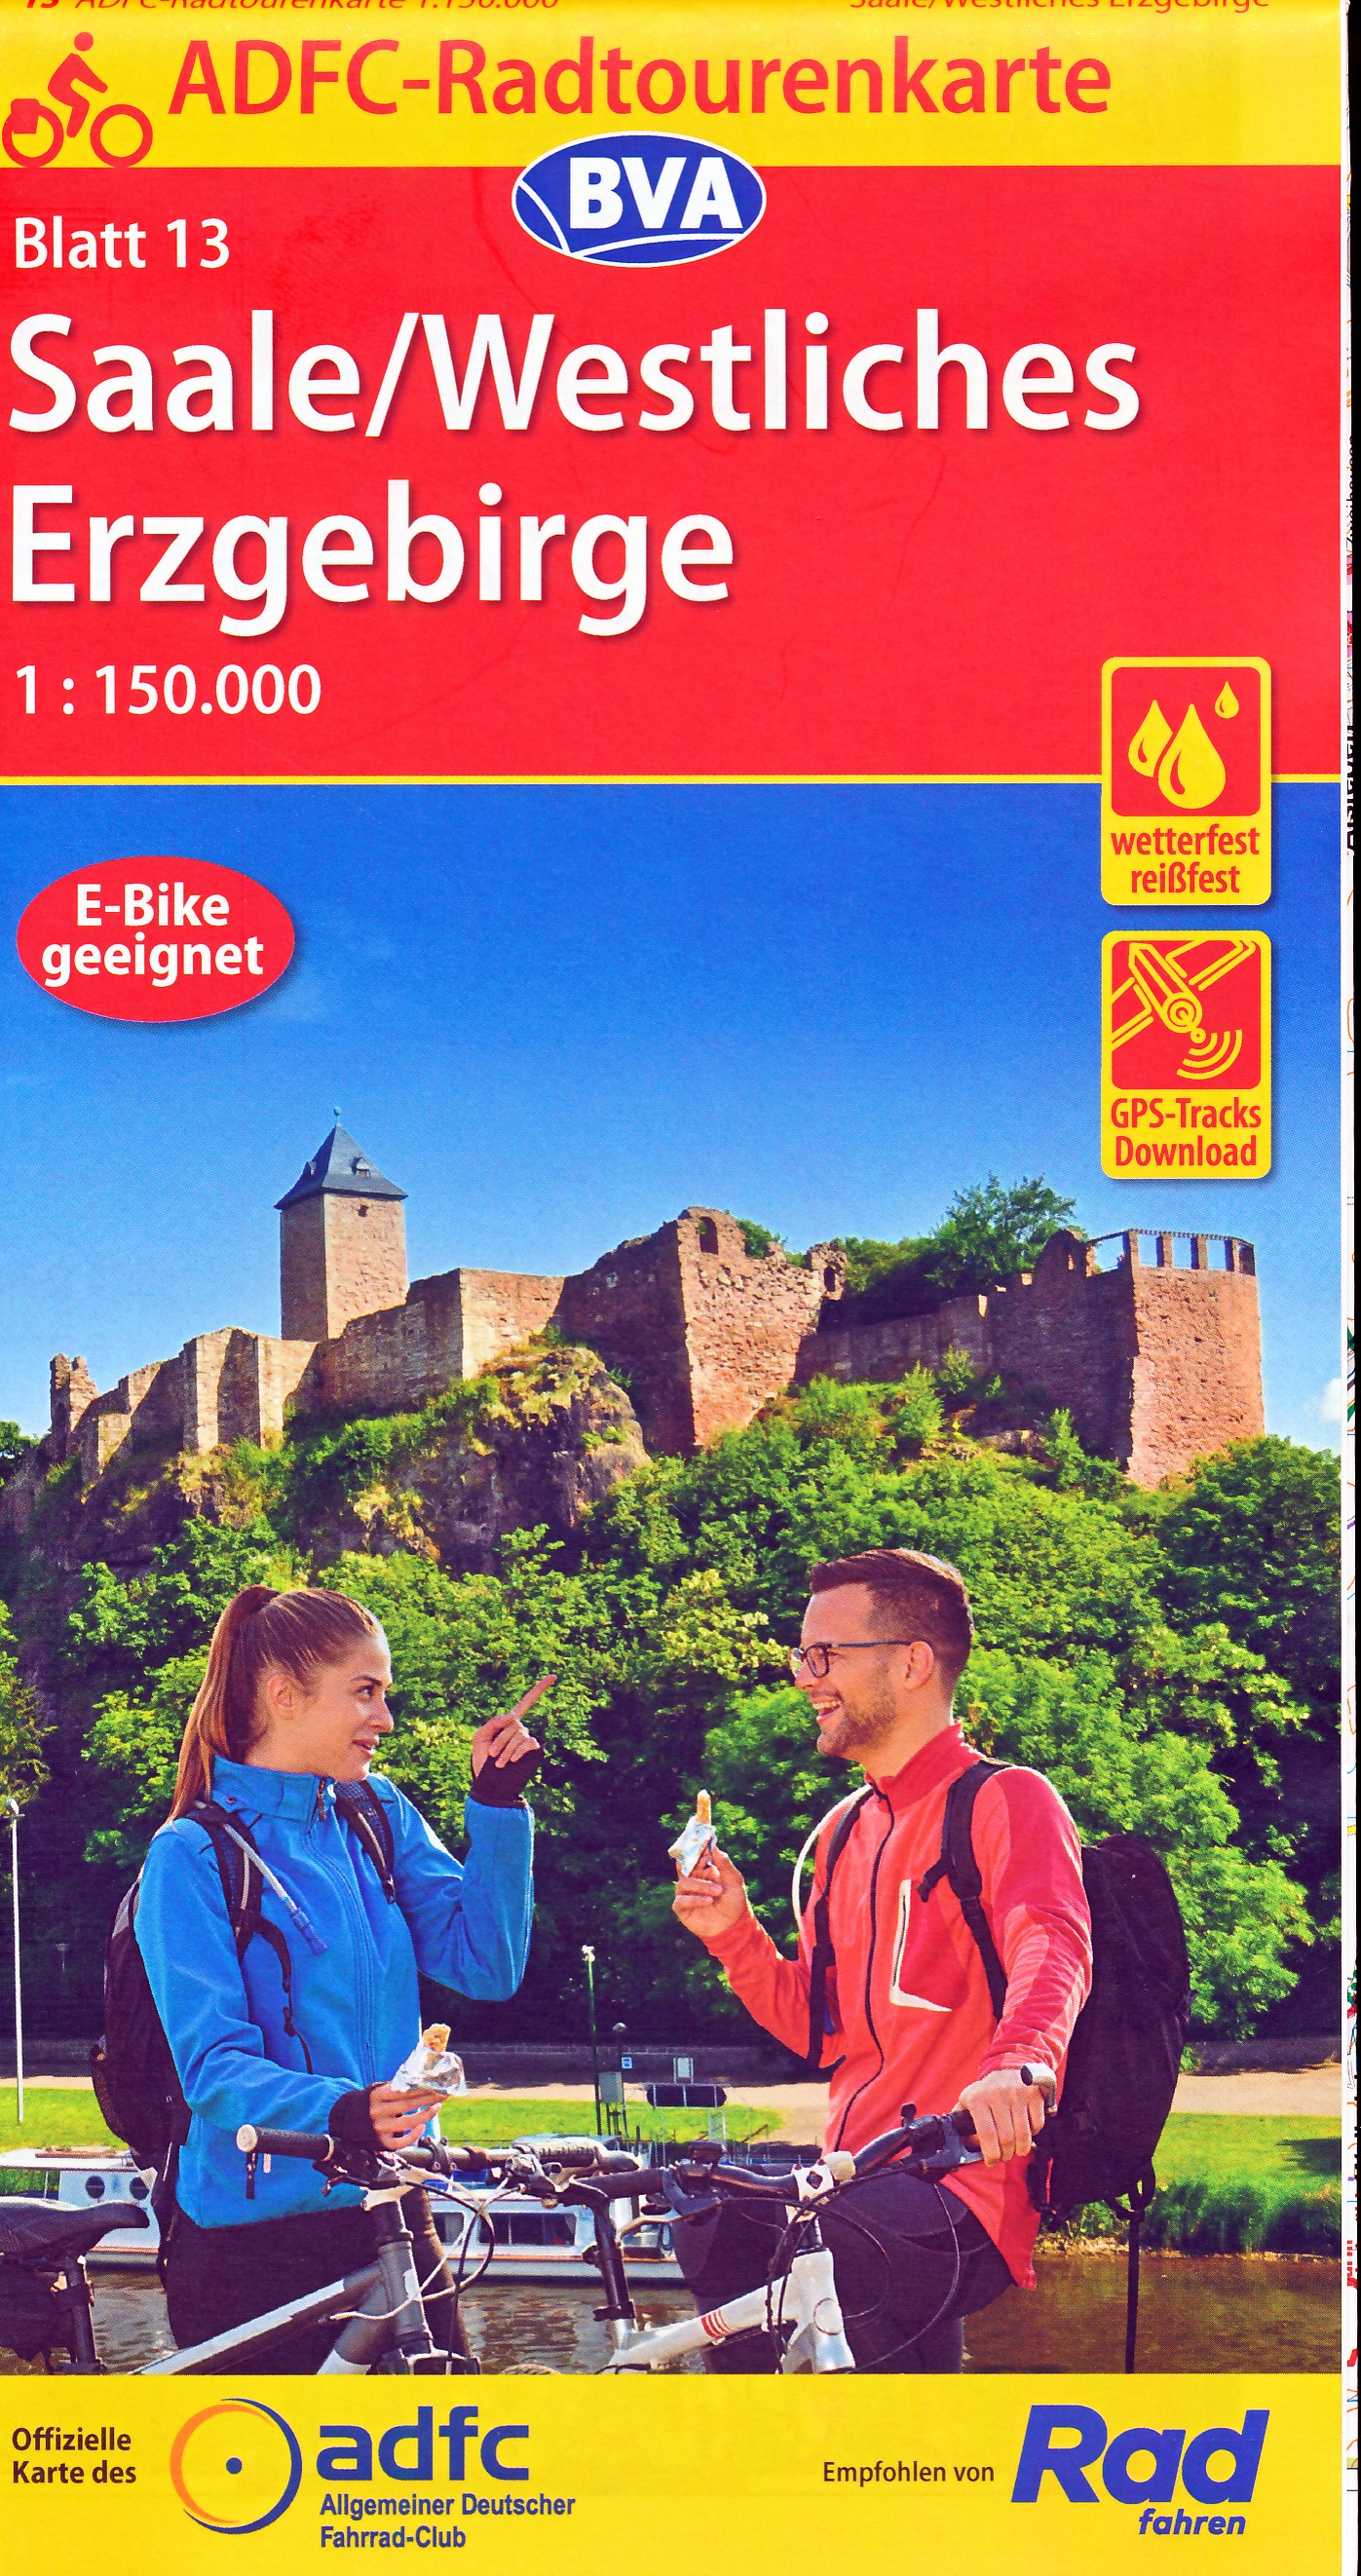 Fietskaart 13 ADFC Radtourenkarte Saale - Westliches Erzgebirge | BVA BikeMedia de zwerver